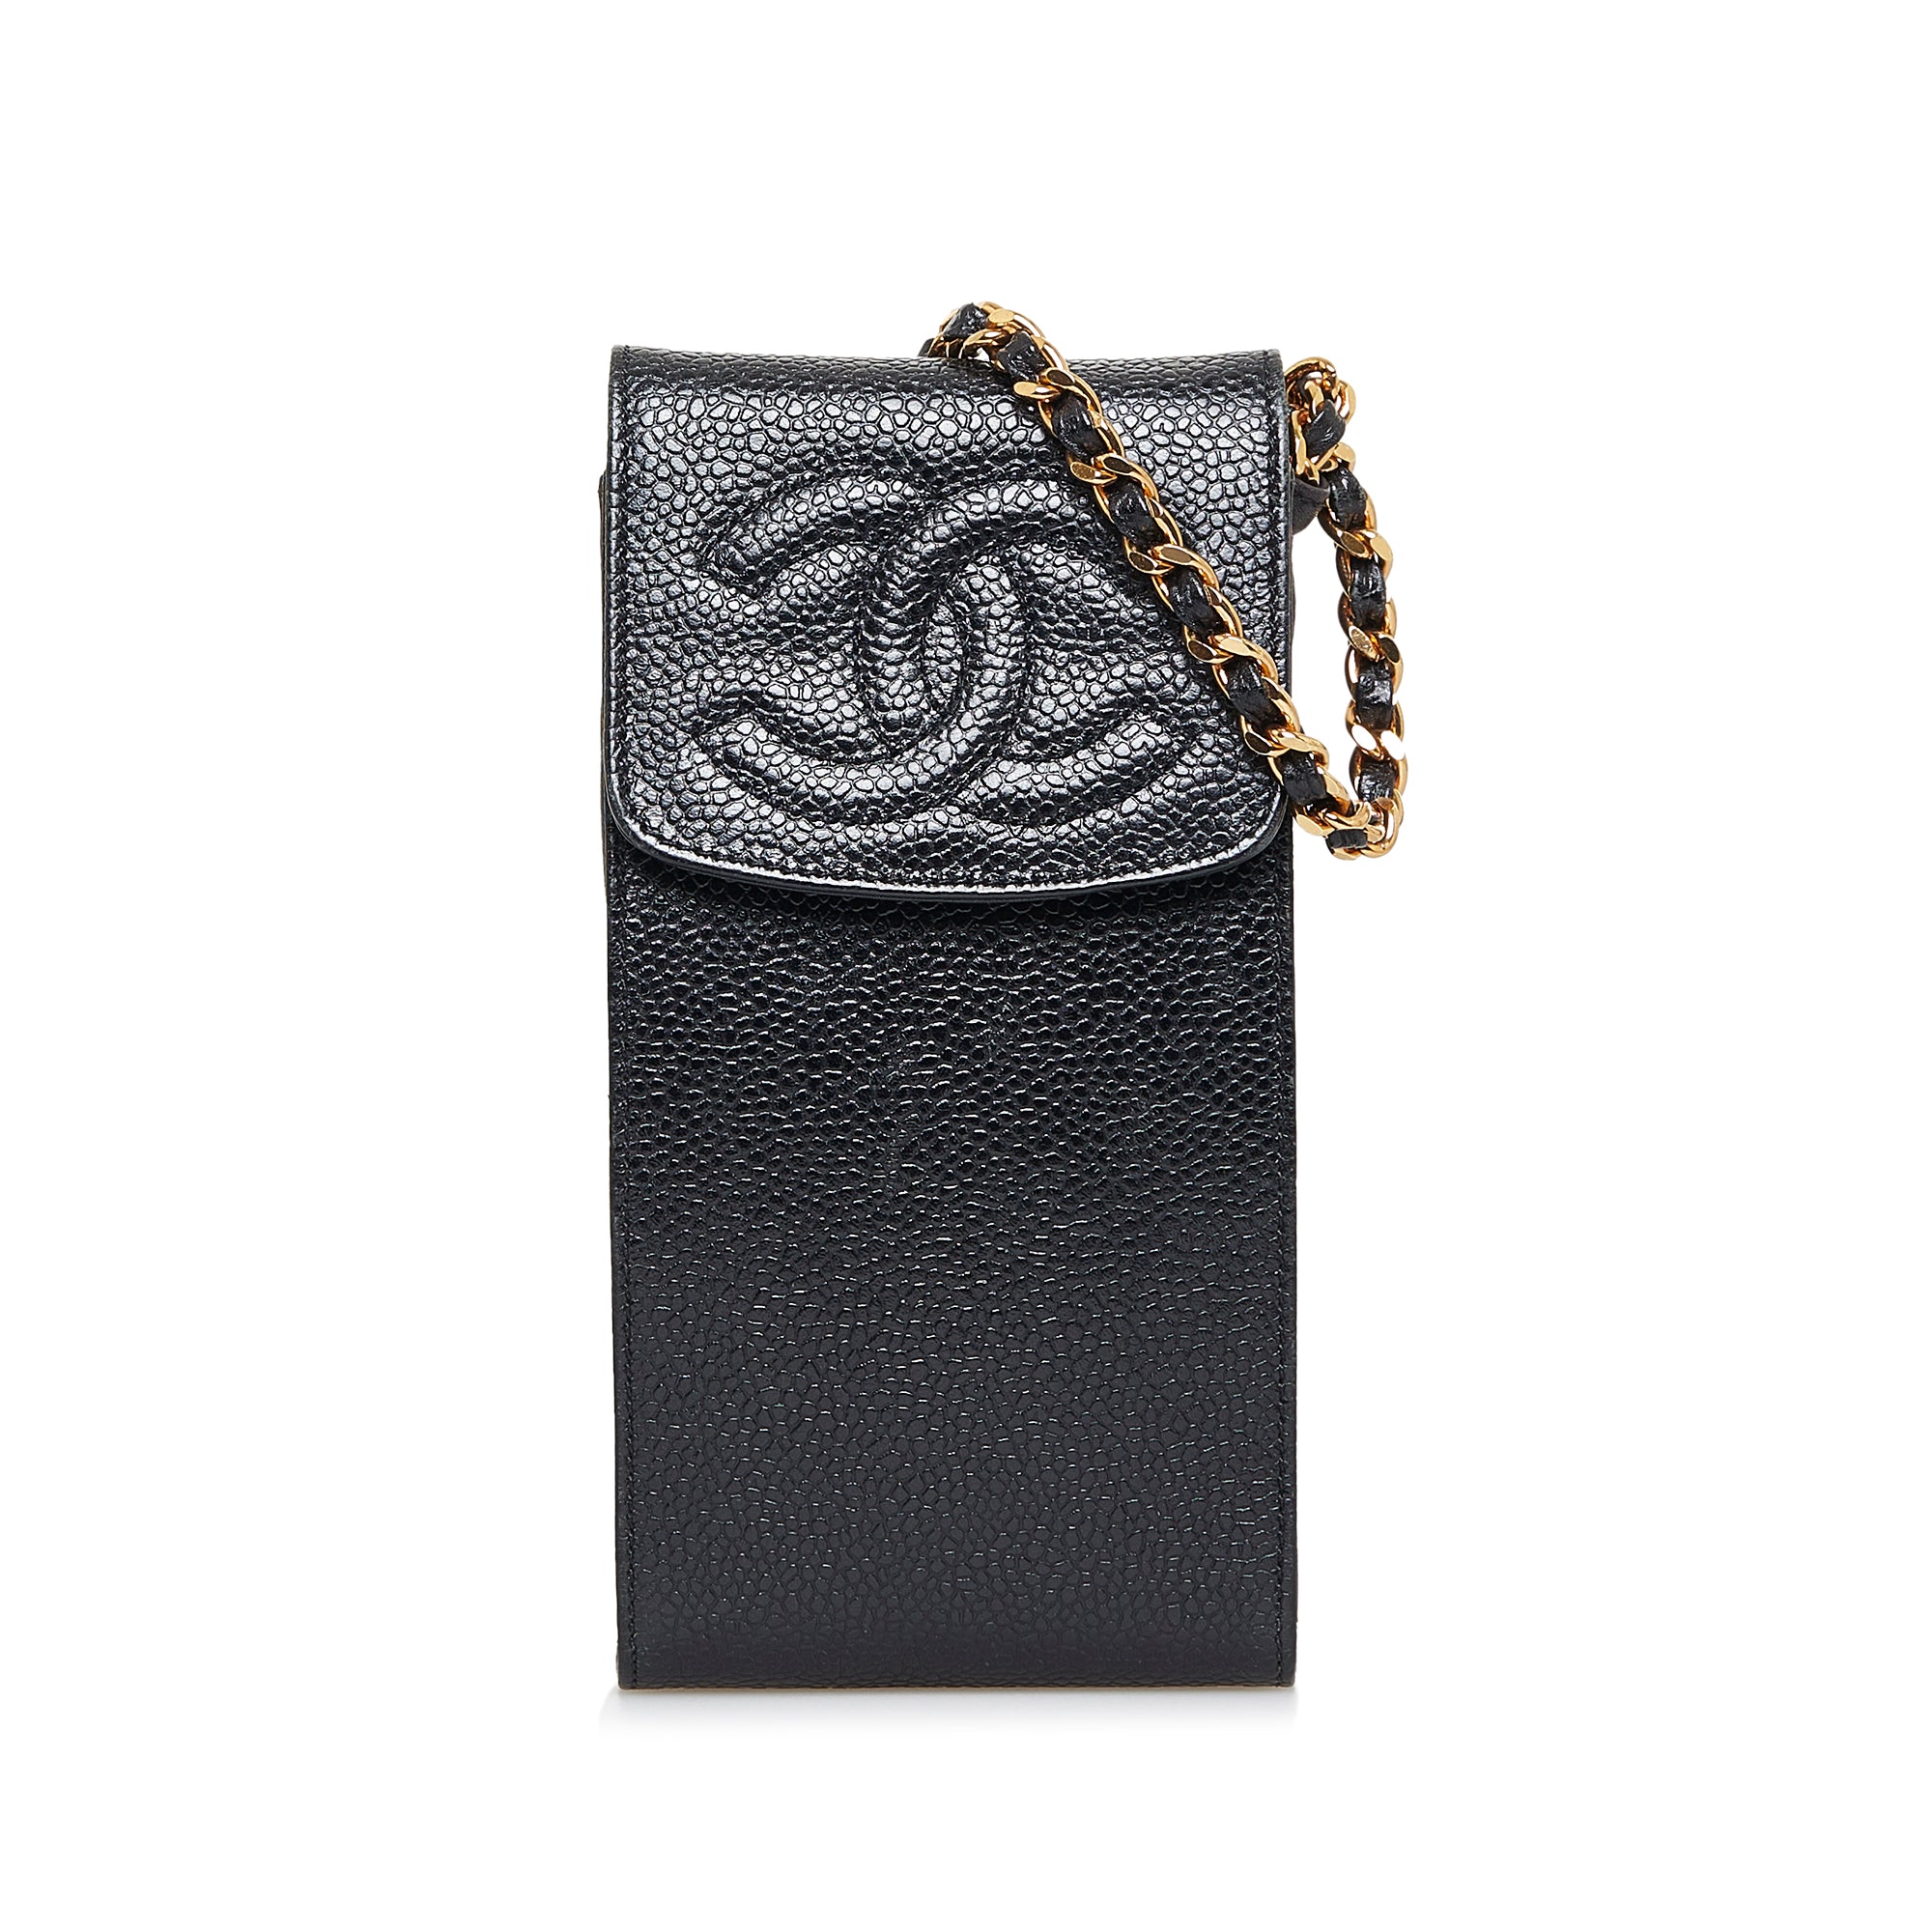 Chanel Vintage Chanel Black Caviar Leather IPhone Cigarette Case 